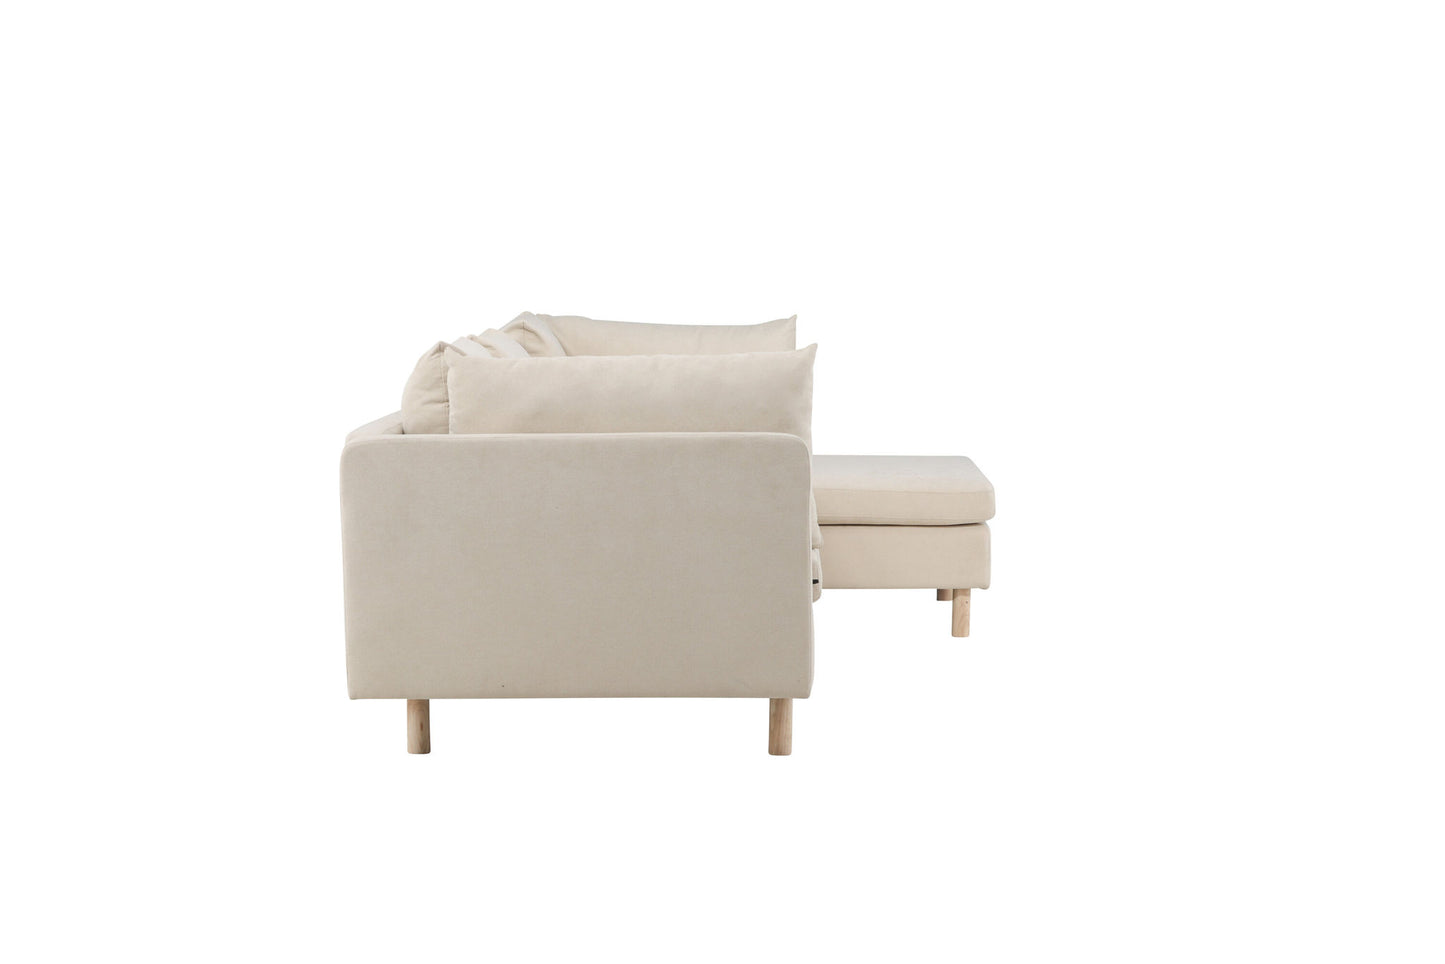 Nul 3 -sæde sofa - Woodlook / Beige stof